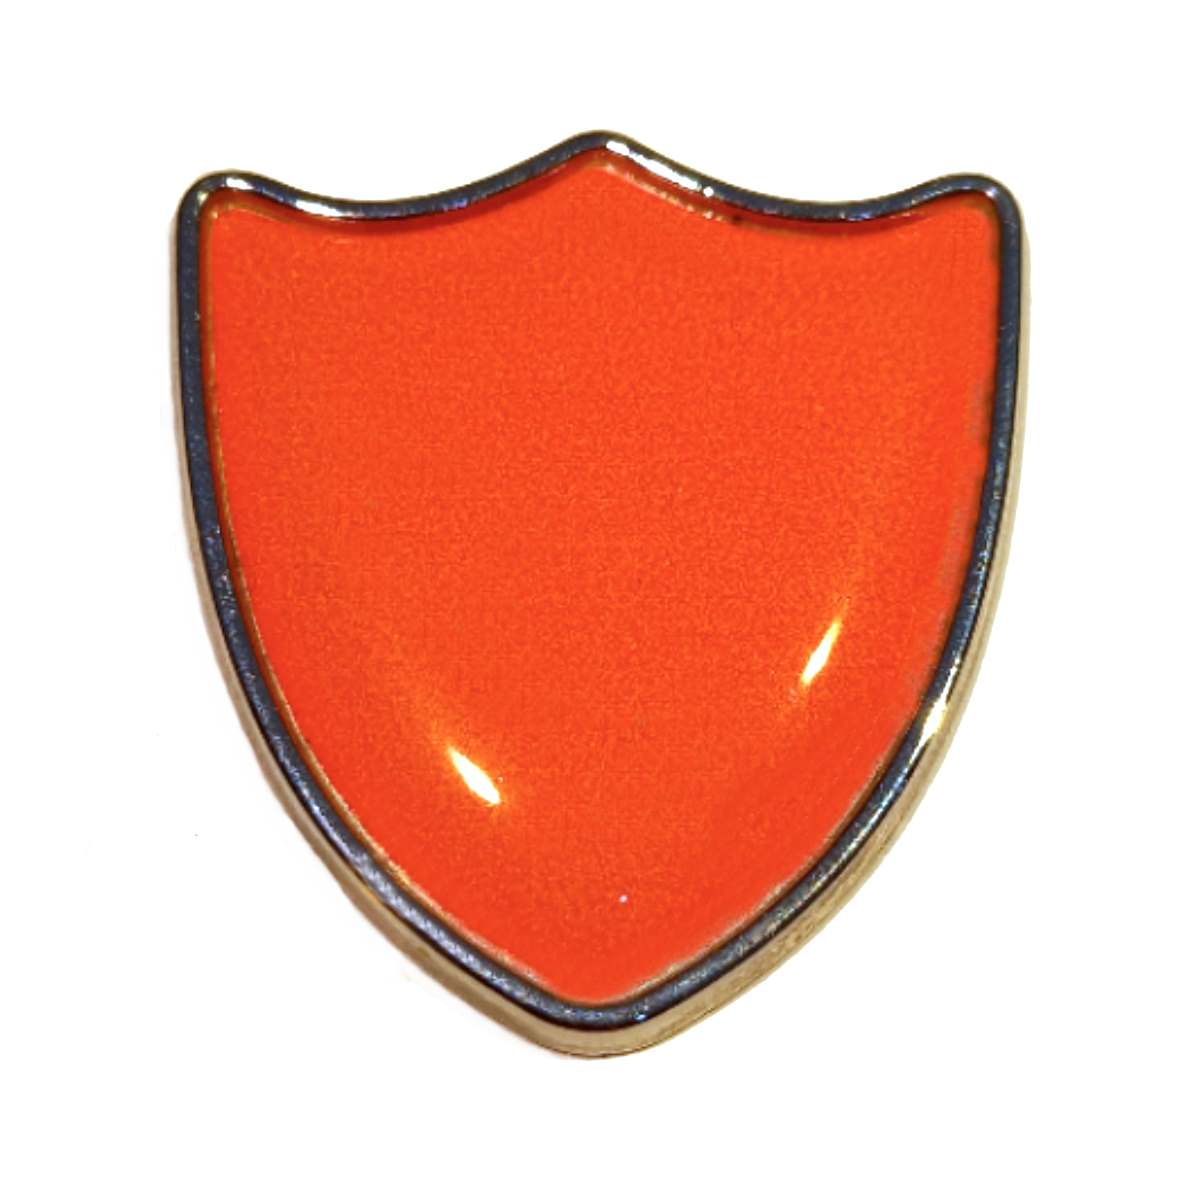 Orange shield badge